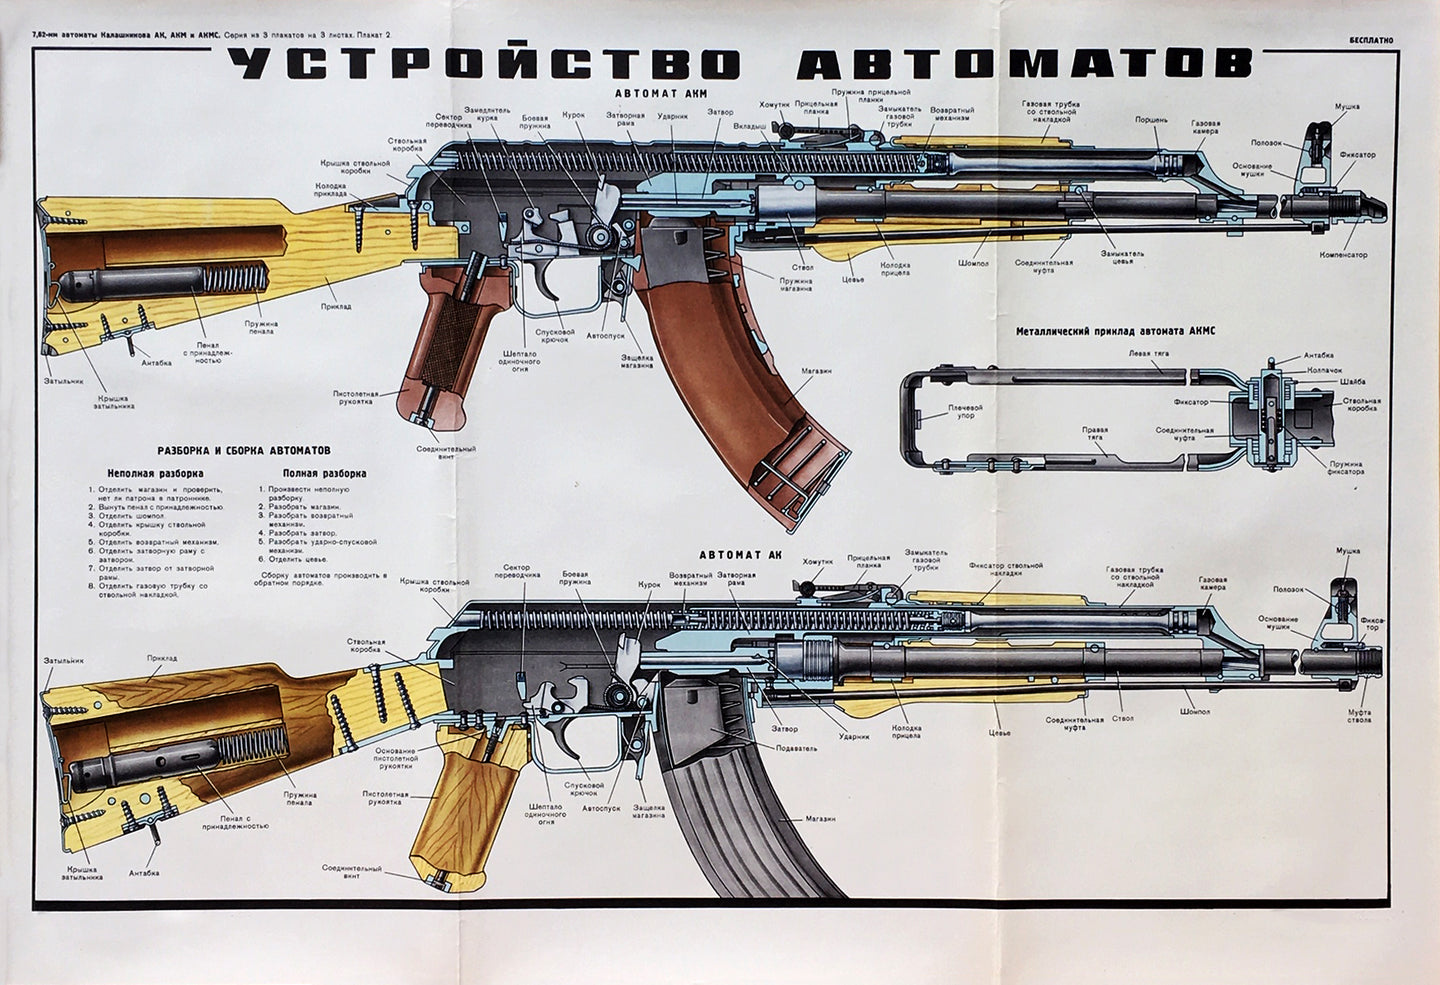 AK47 Kalashnikov Assault Rifle Automatic Mechanism Poster 1980